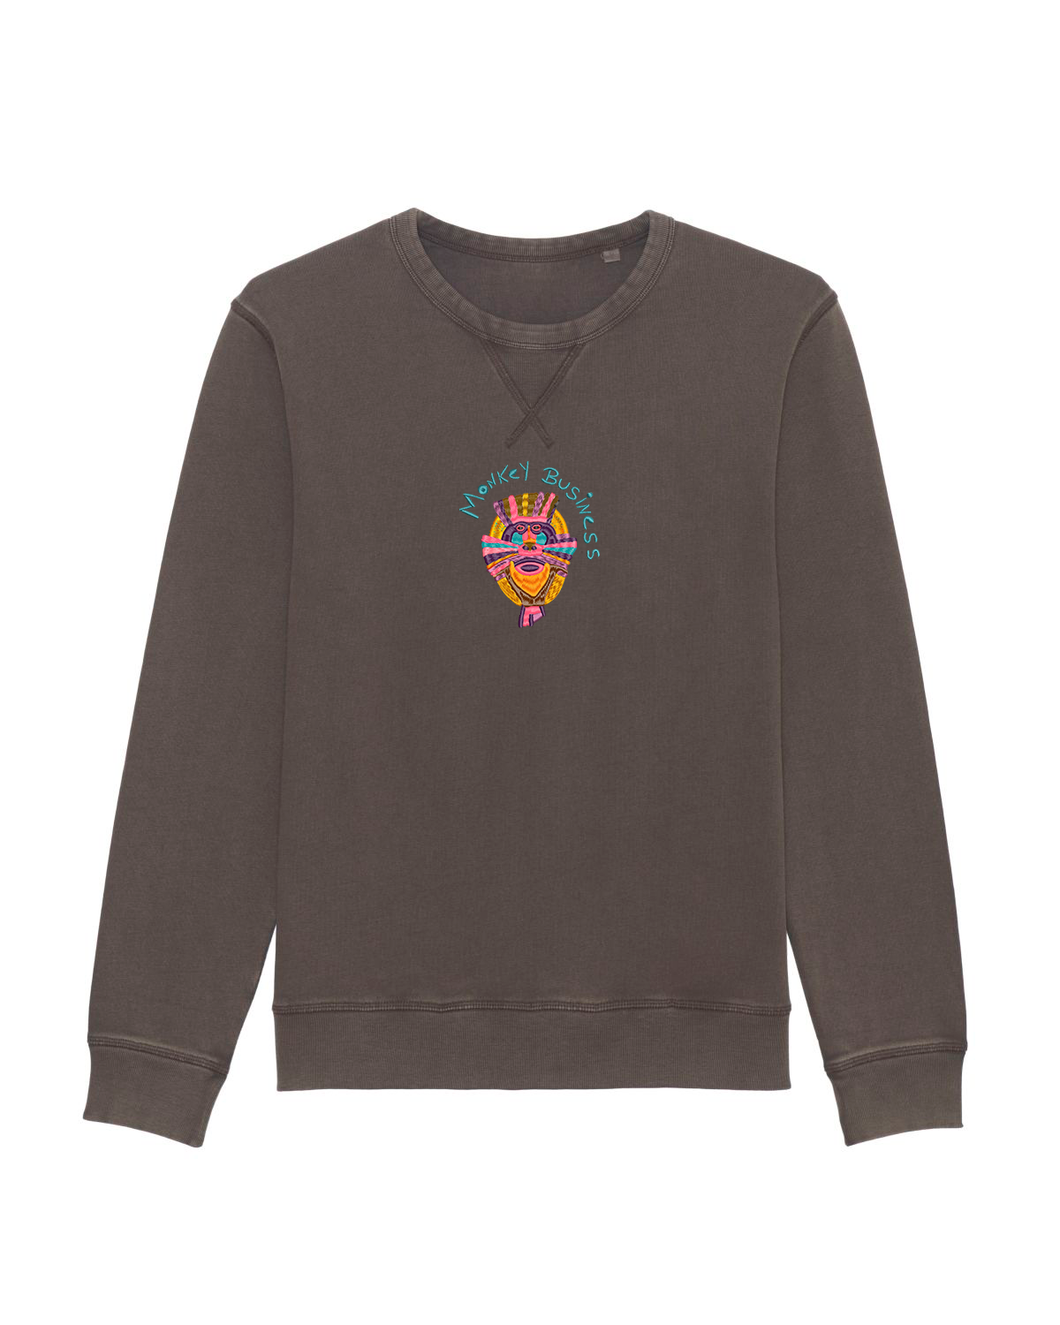 MONKEY BUSINESS 🐵- Embroidered UNISEX CREW NECK garment dyed sweatshirt